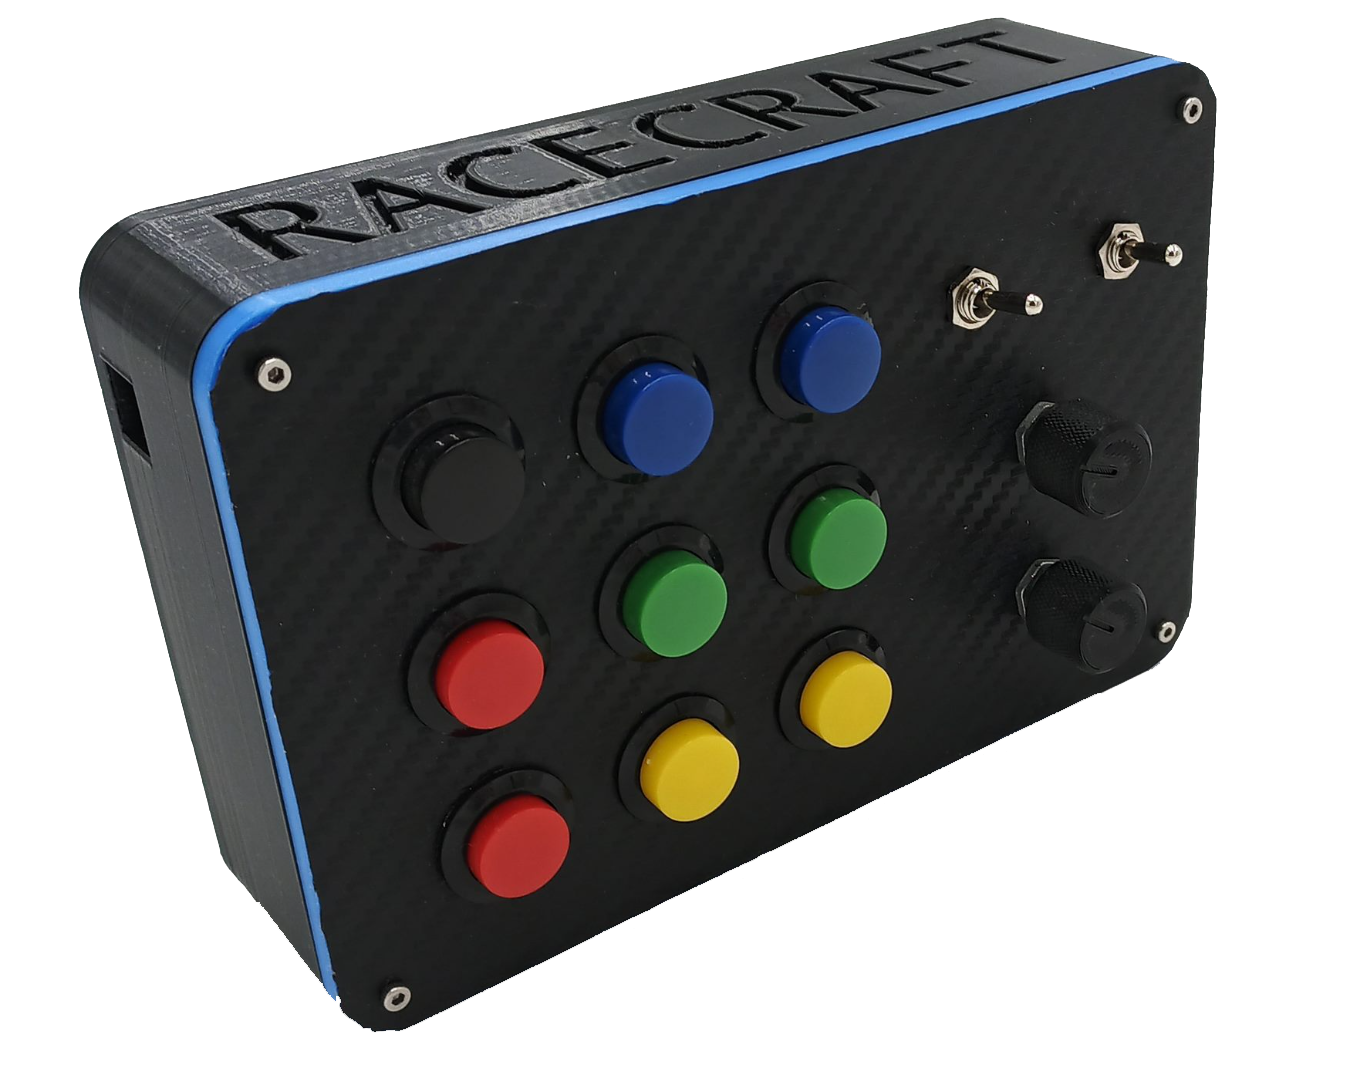 Racecrafts NZ Sim Racing 150x100mm 11 Button Box, Racing, Flight sim, Controller